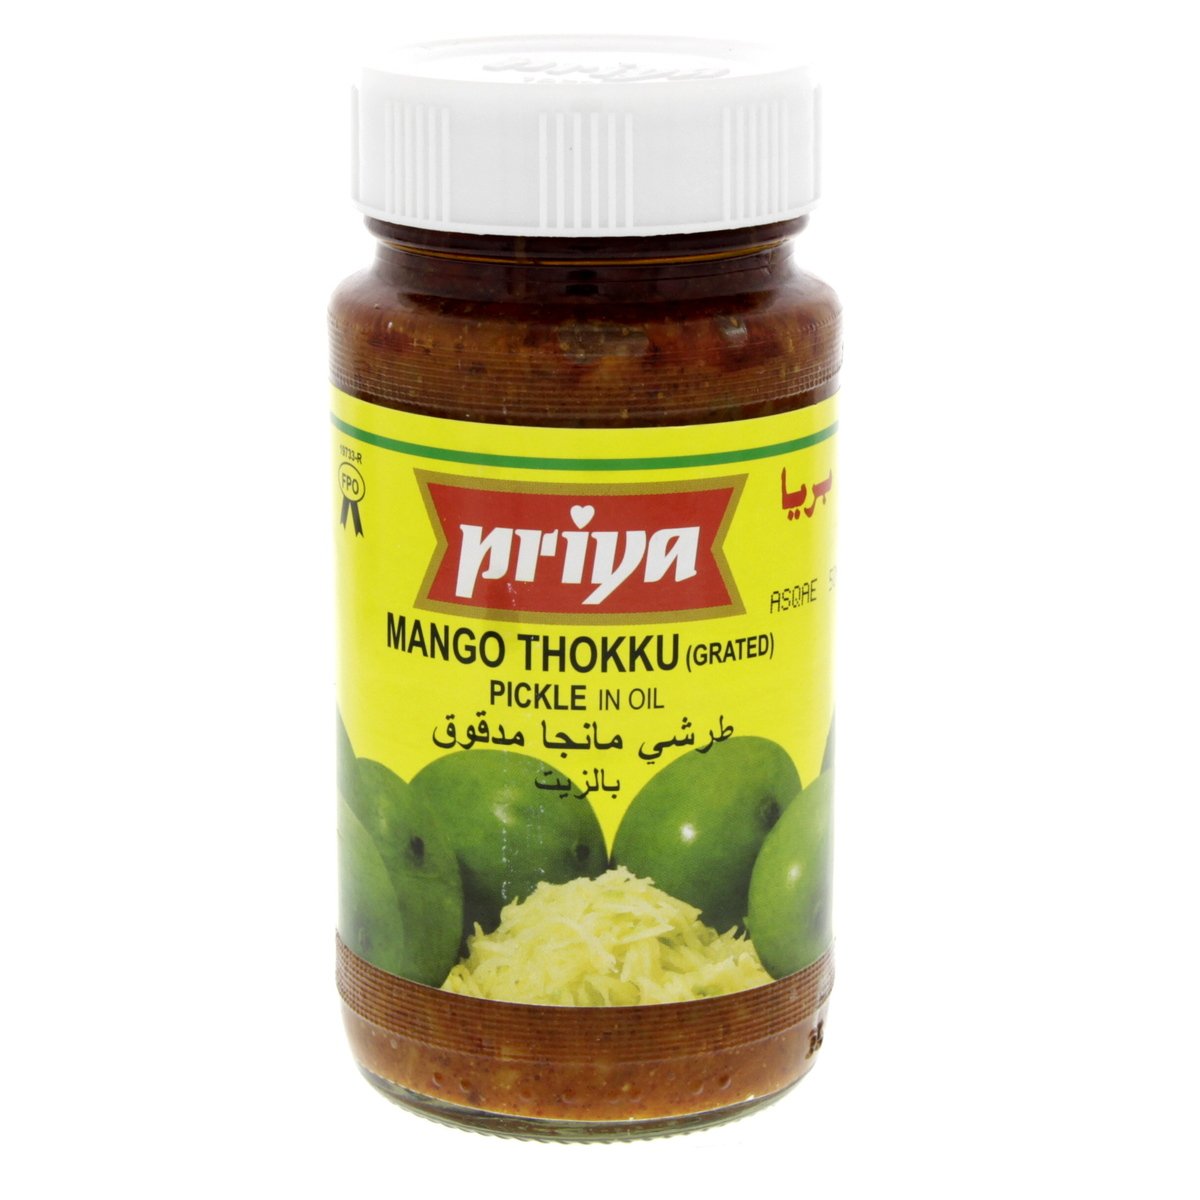 Priya Mango Thokku Pickle 300 g